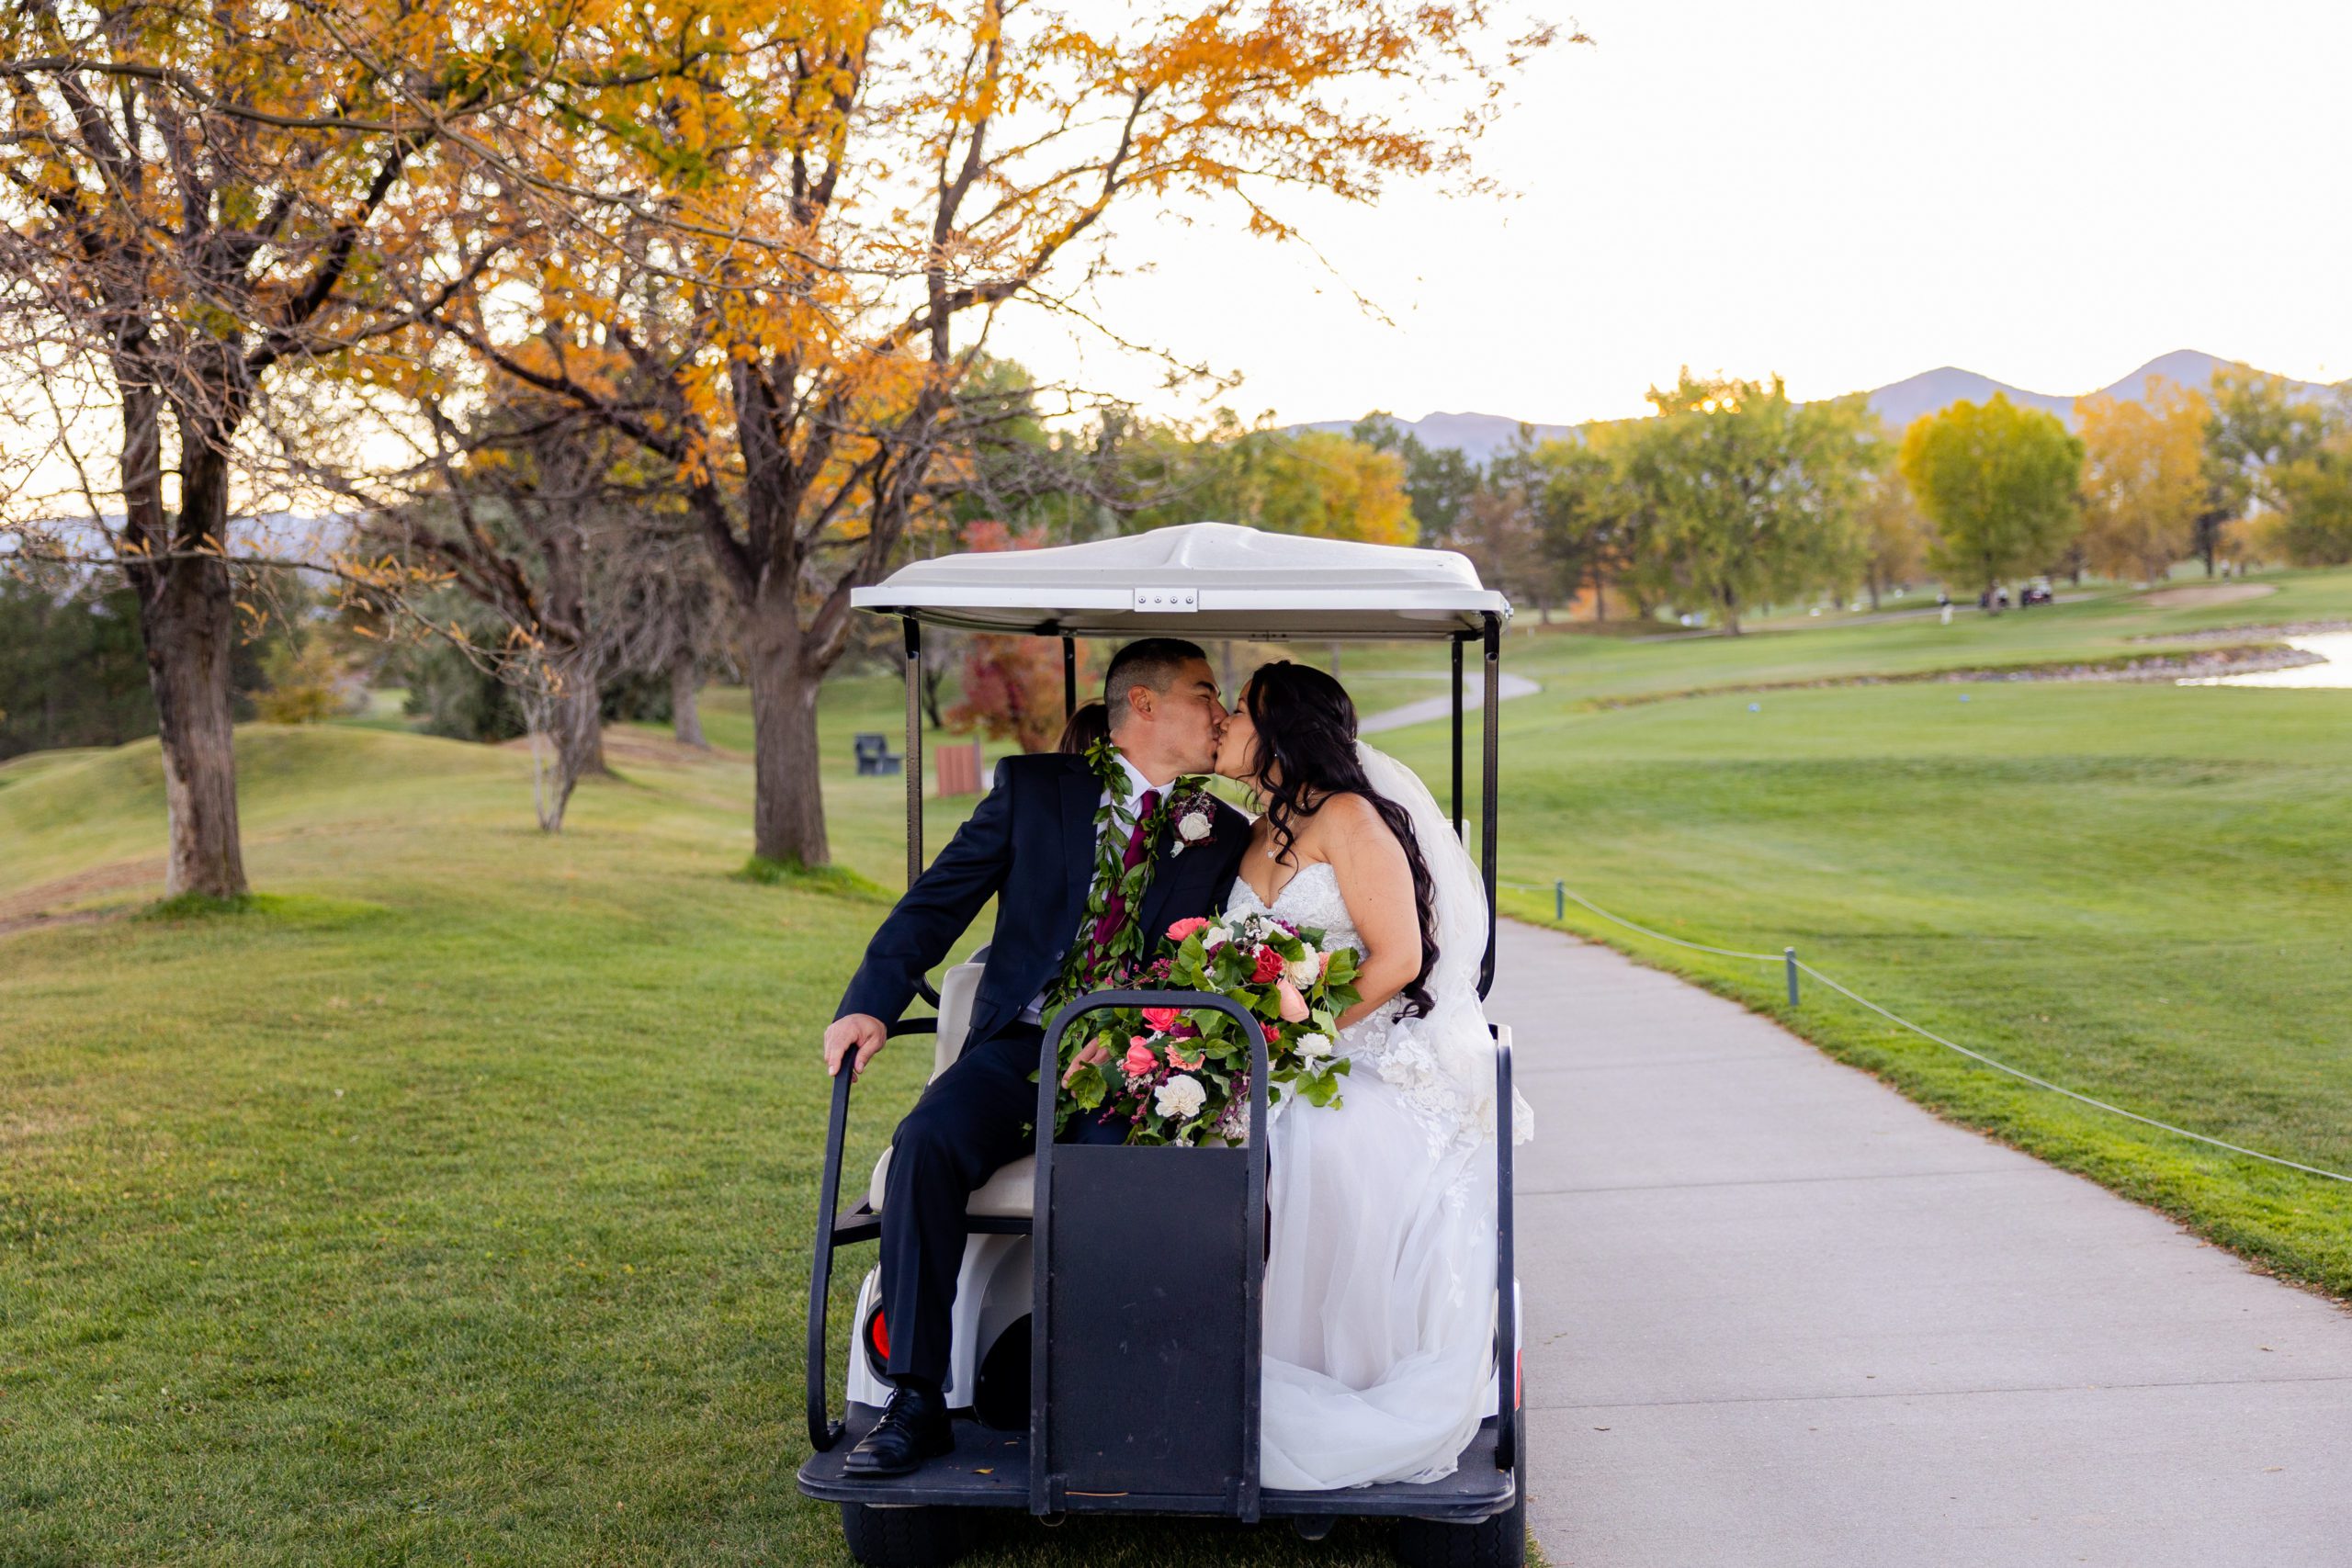 The Barn at Raccoon Creek Golf Cart kiss with bride and groom